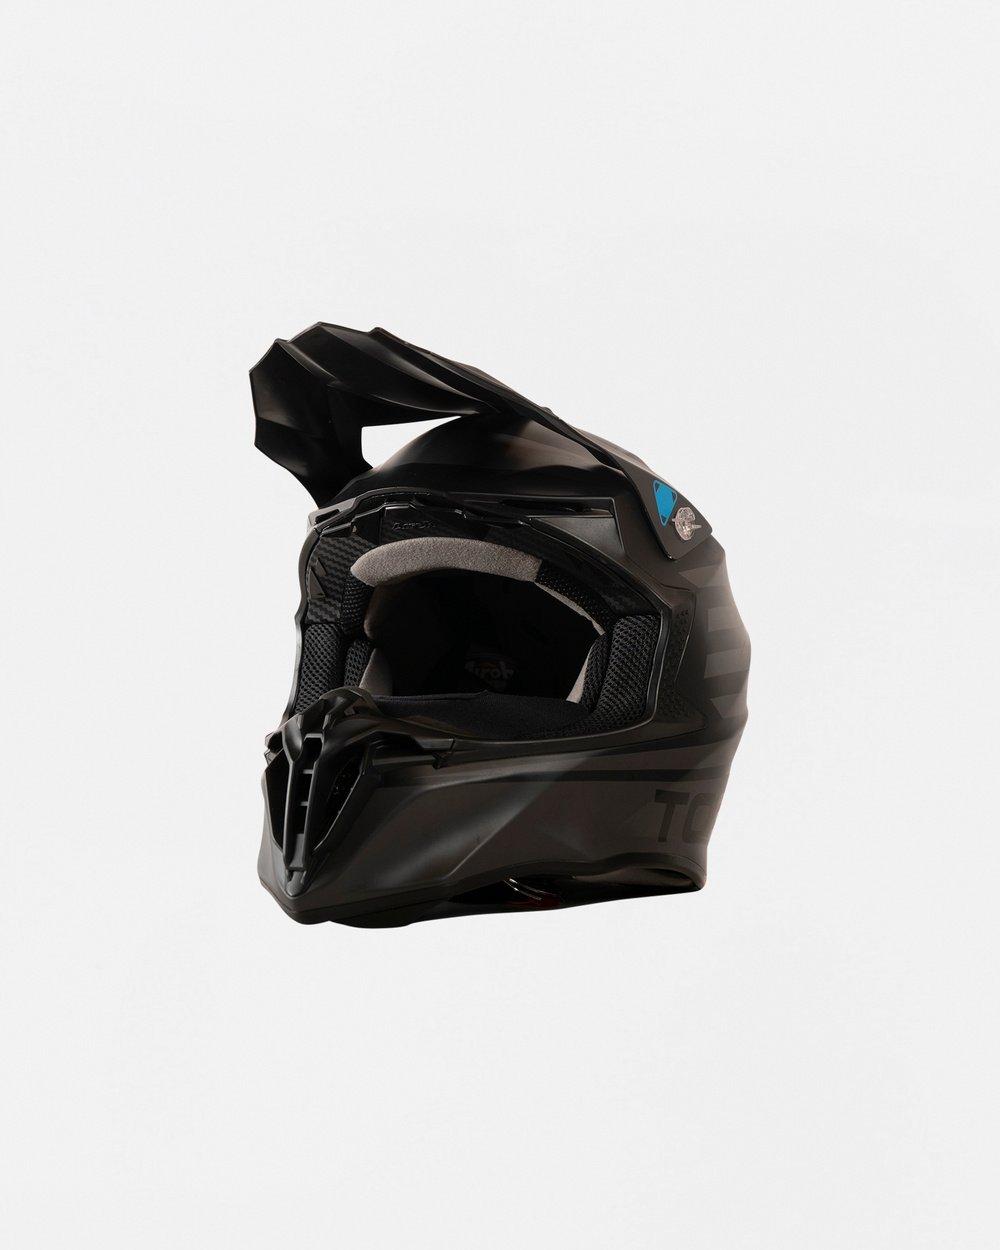 TOBE Vale Helmets